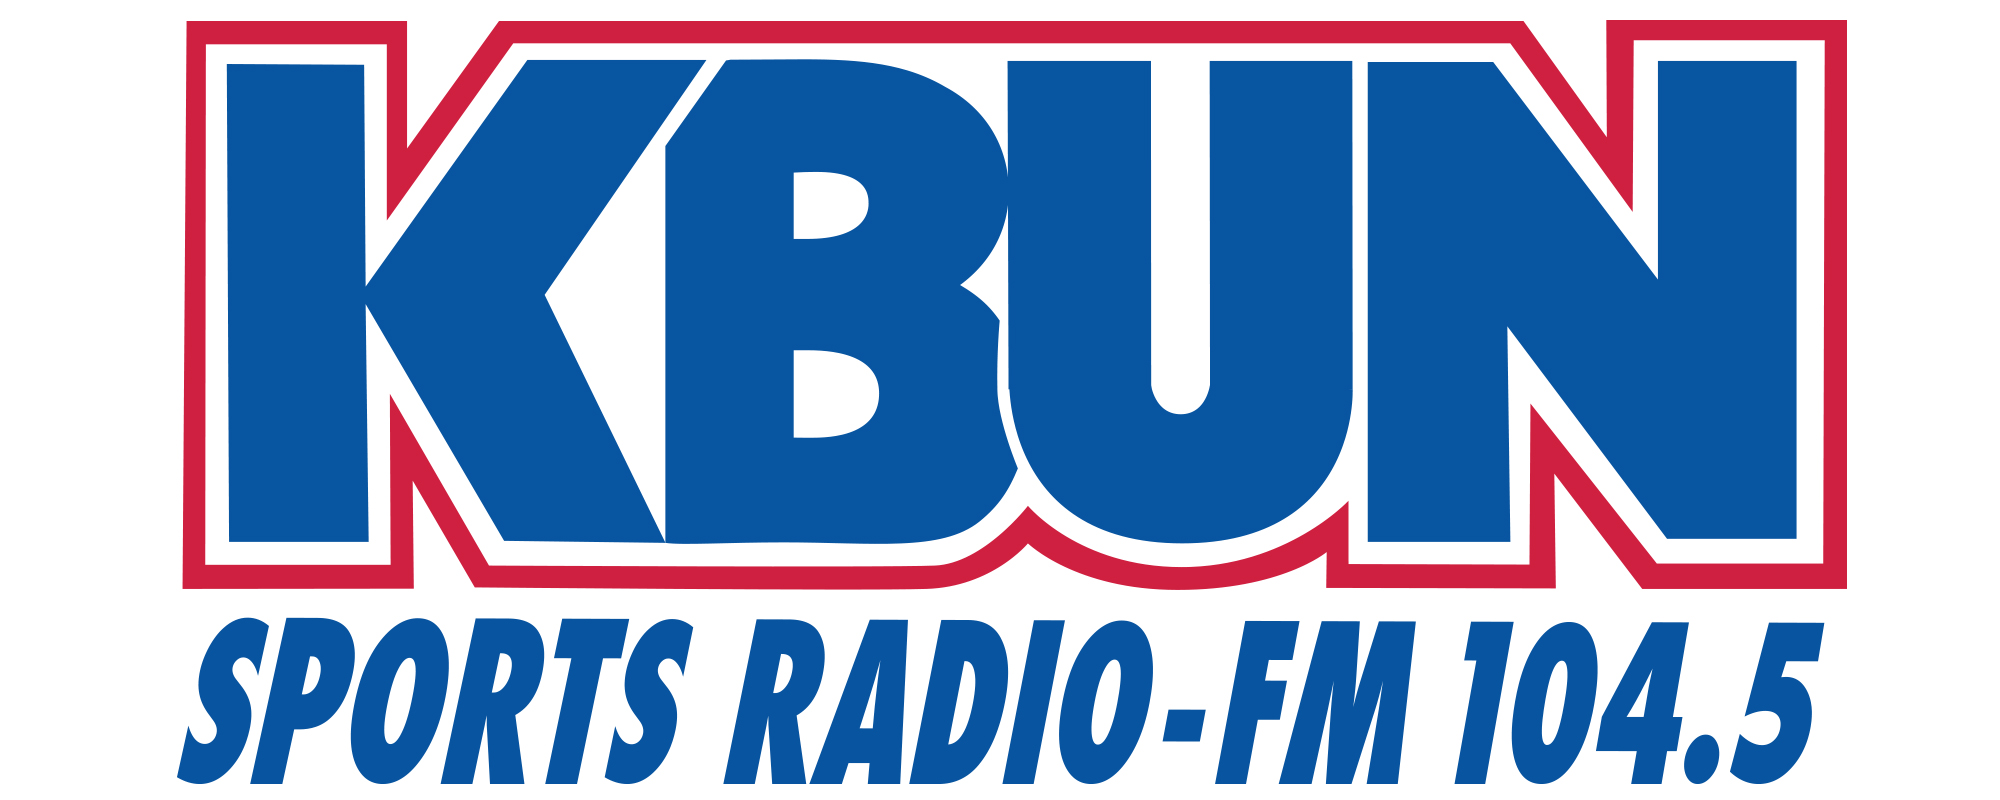 KBUN SportsRadio